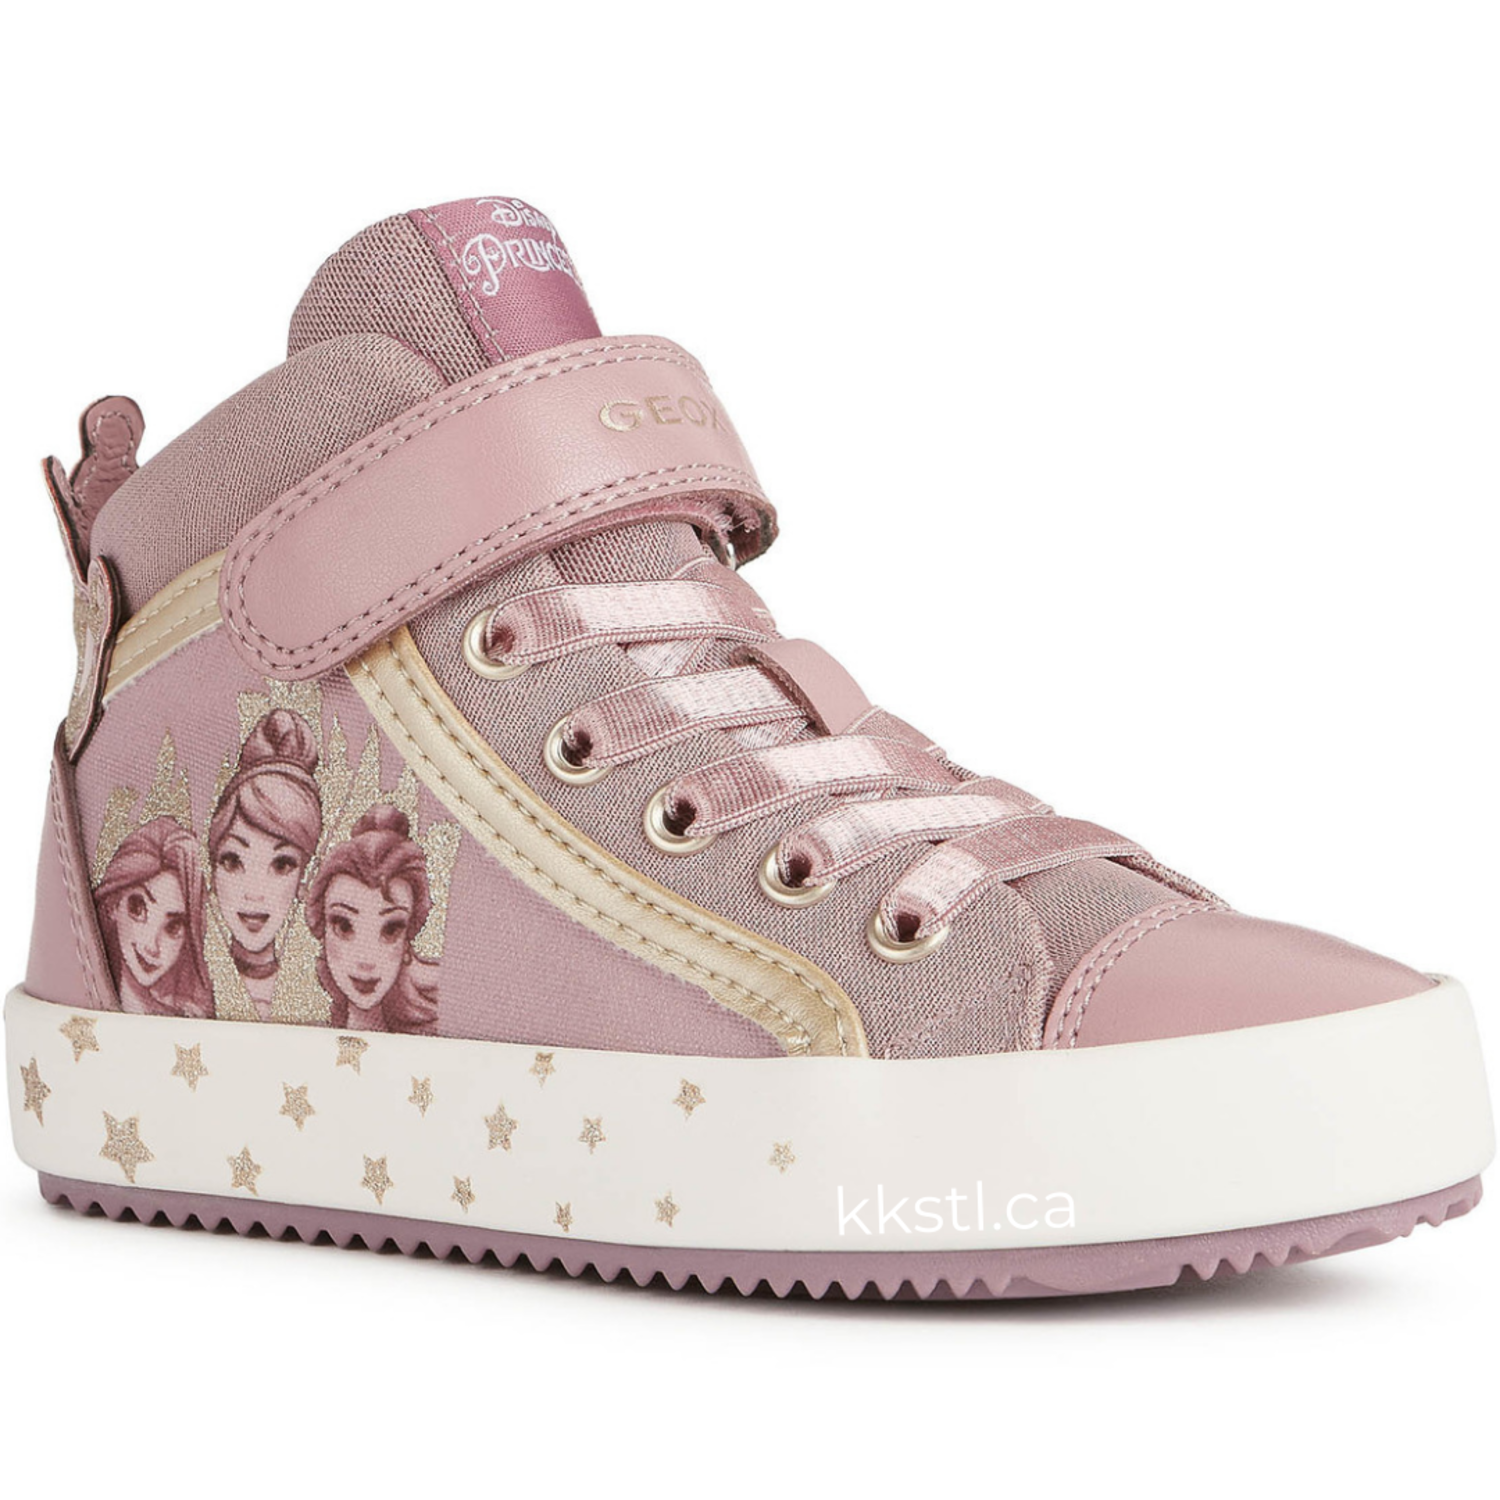 Geox Kalispera Pink/Platinum - Kids Shoes in Canada - Kobbler St Laurent